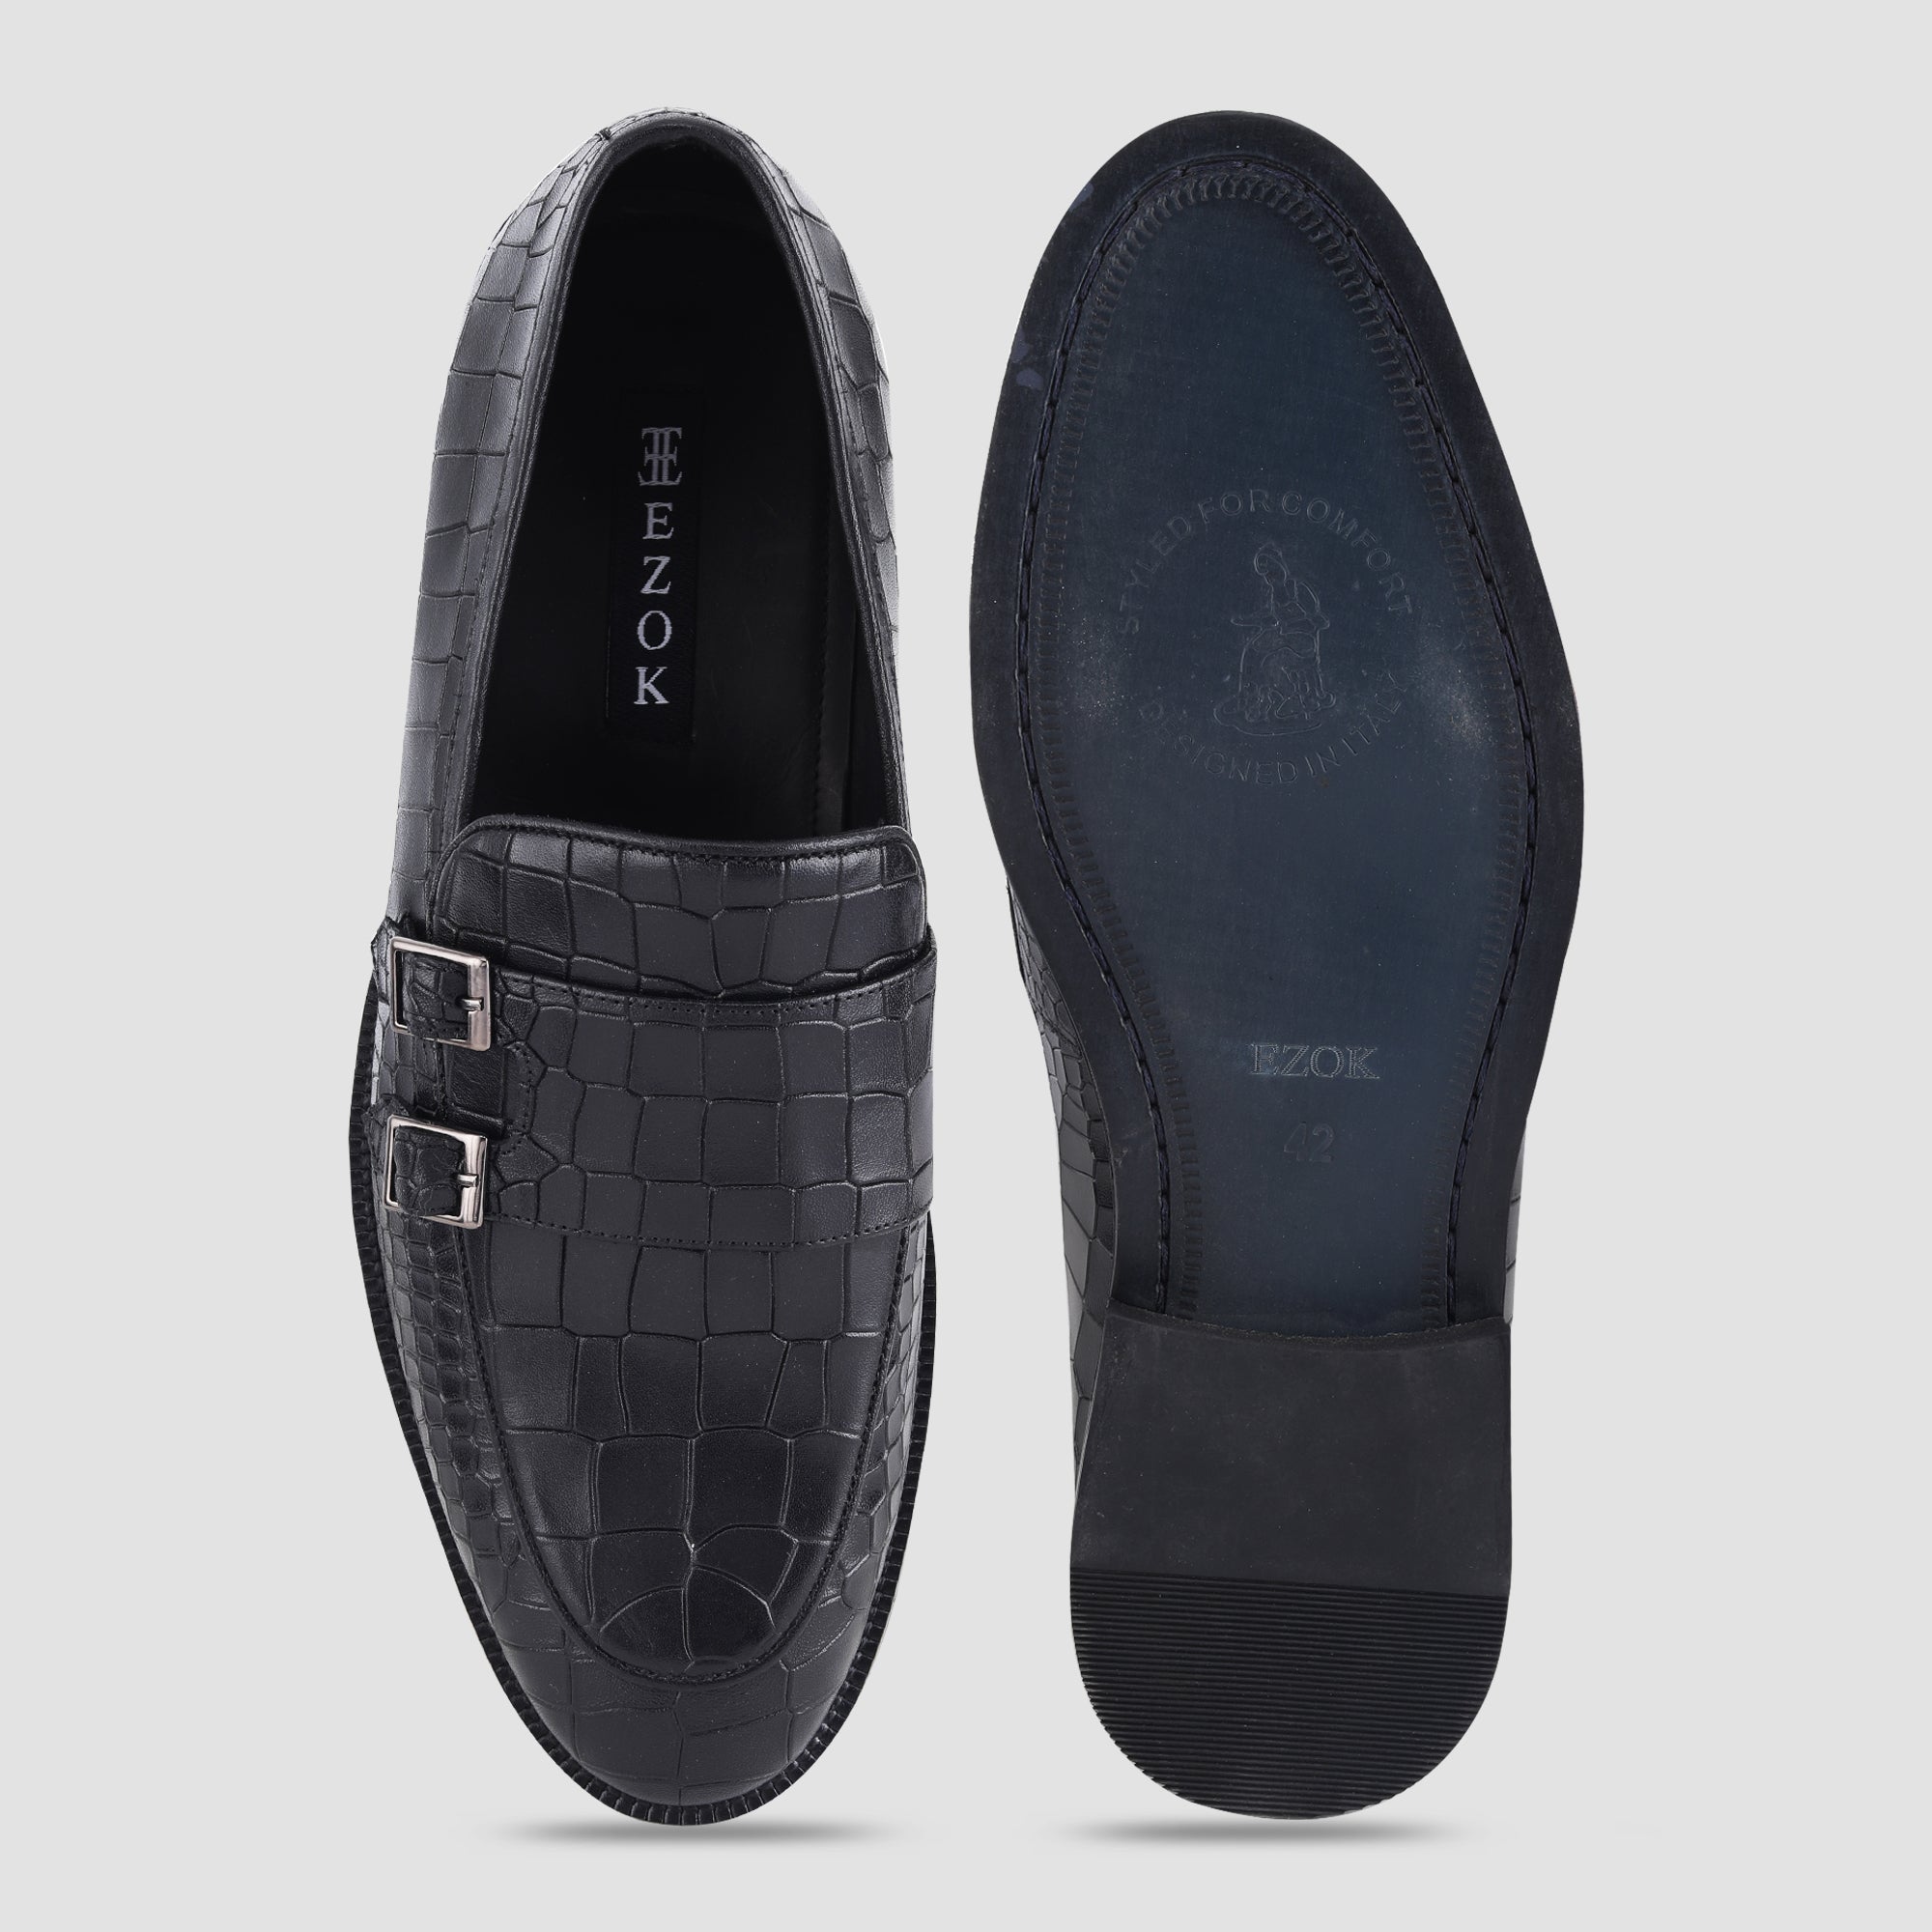 Ezok Black Leather Loafer For Men